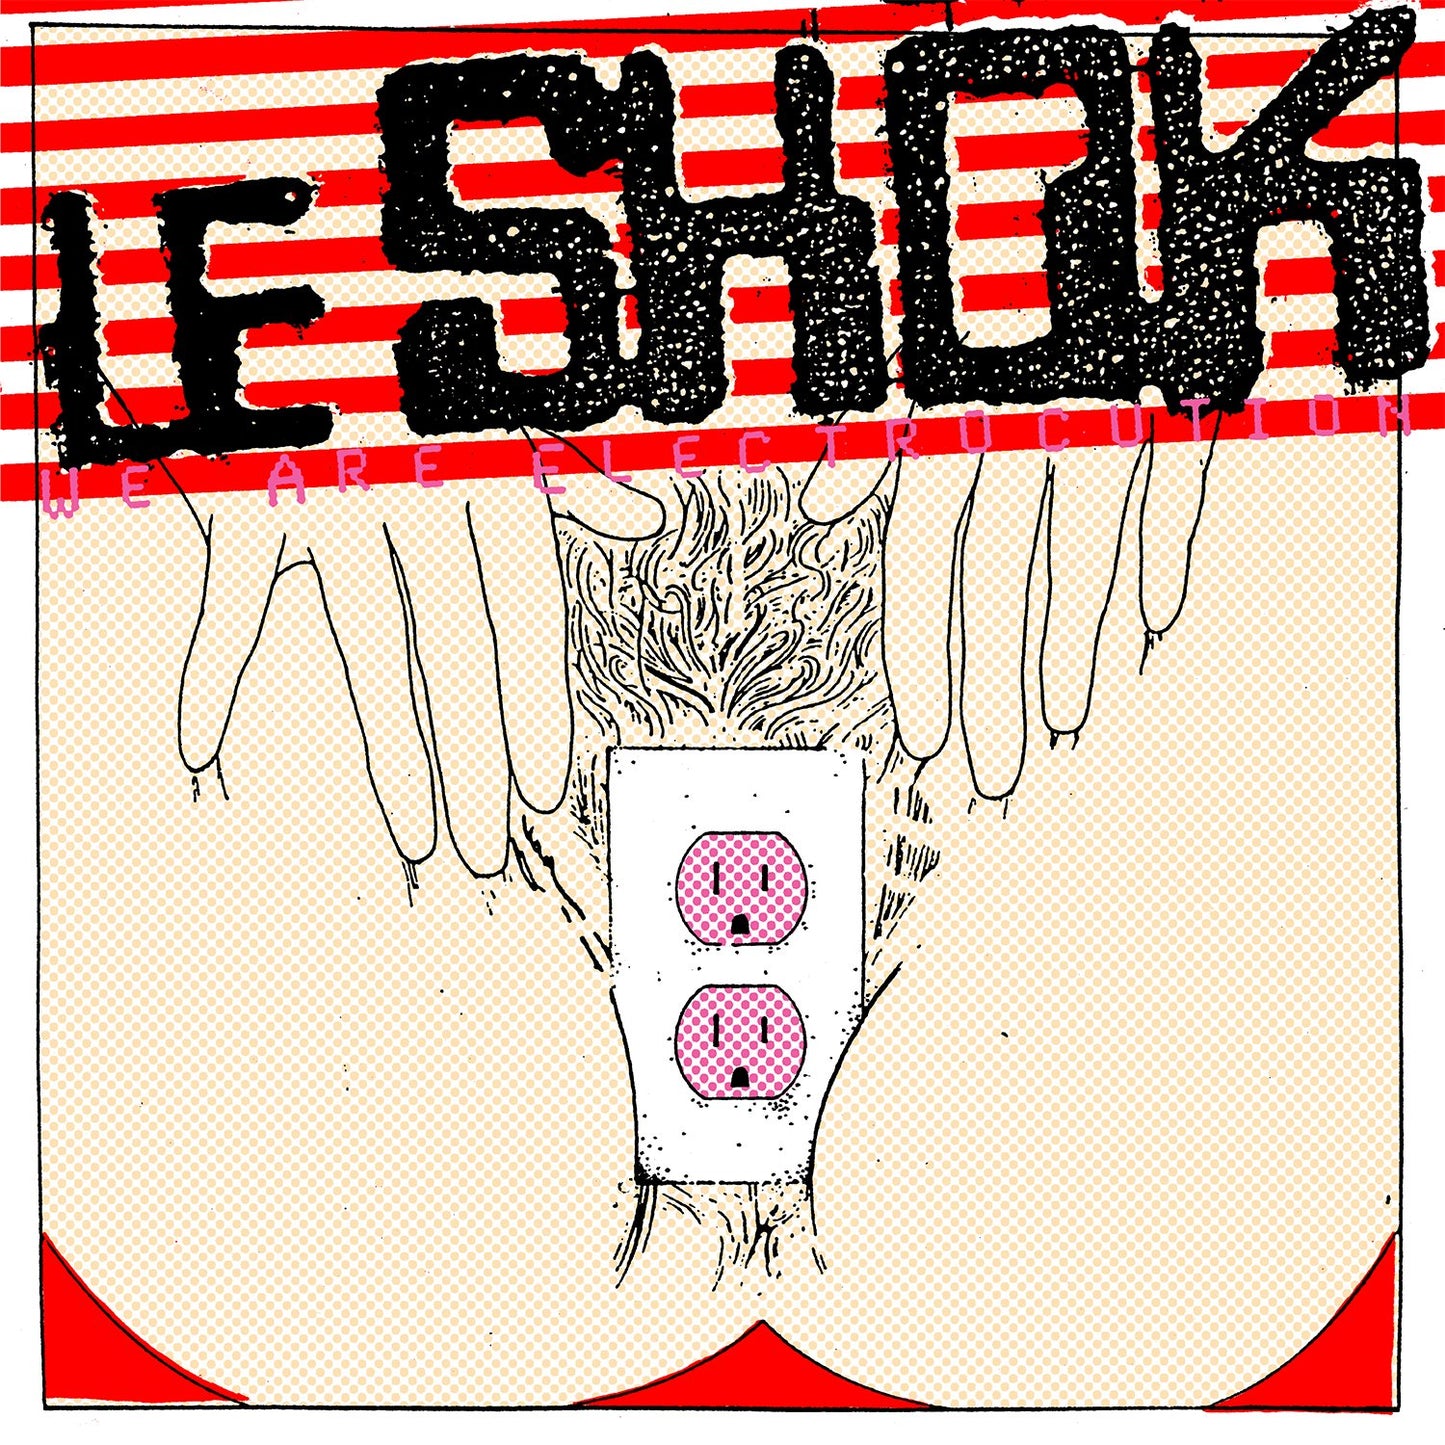 Le Shok - We Are Electrocution - CD